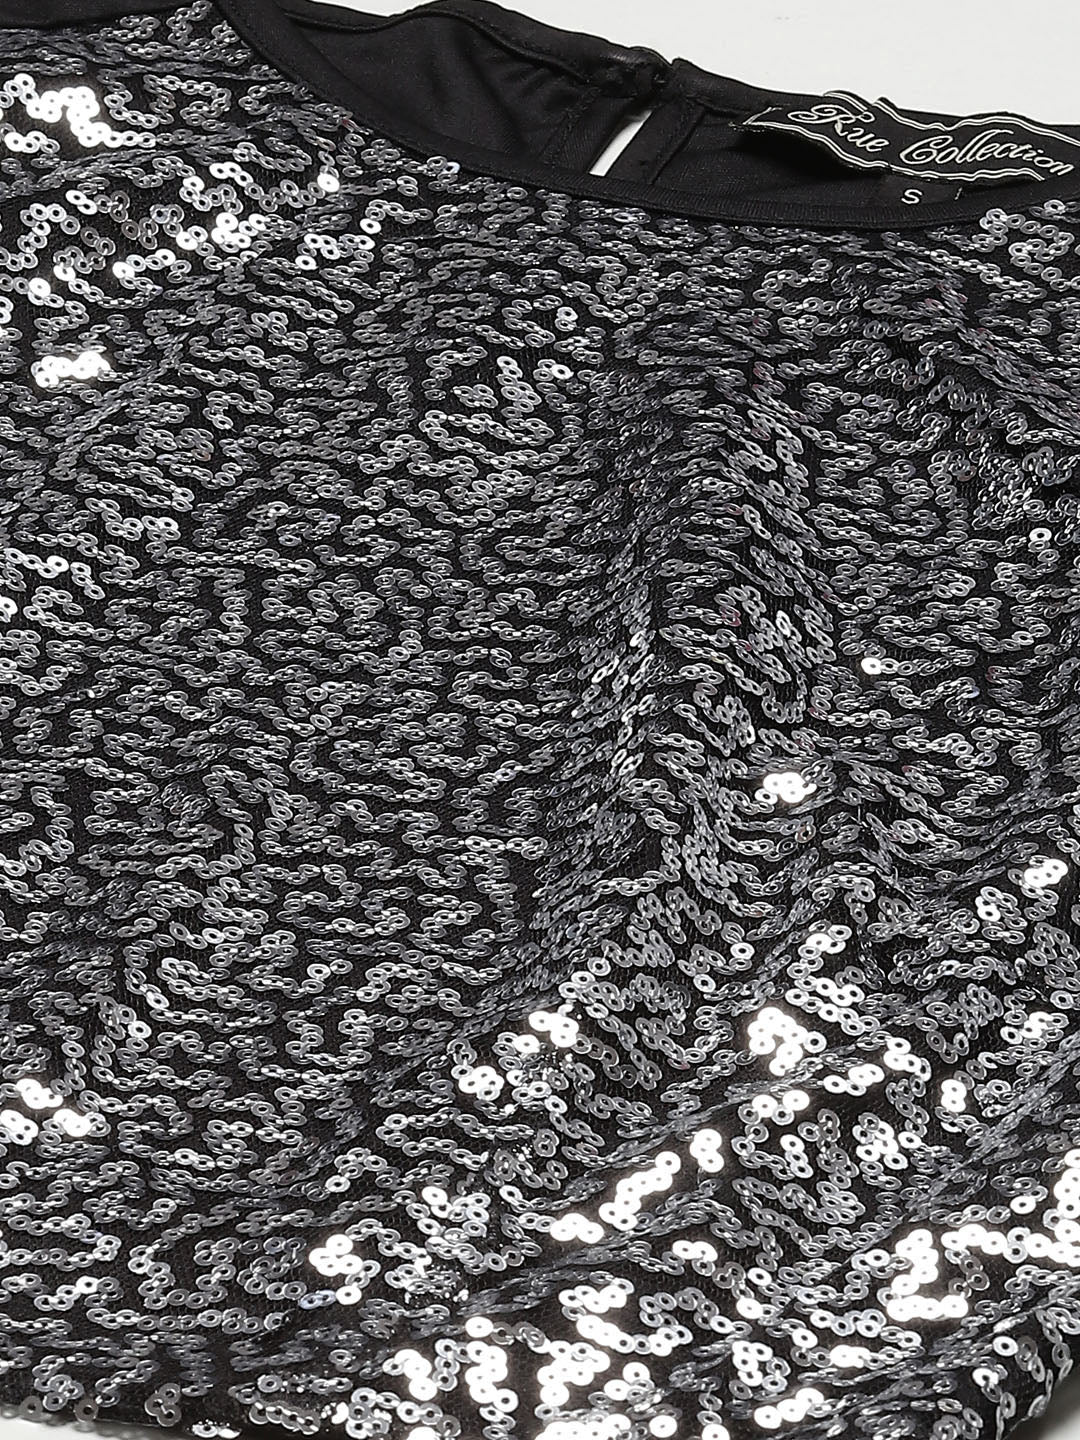 Black & Silver-Toned Embellished Sequined Crop Top